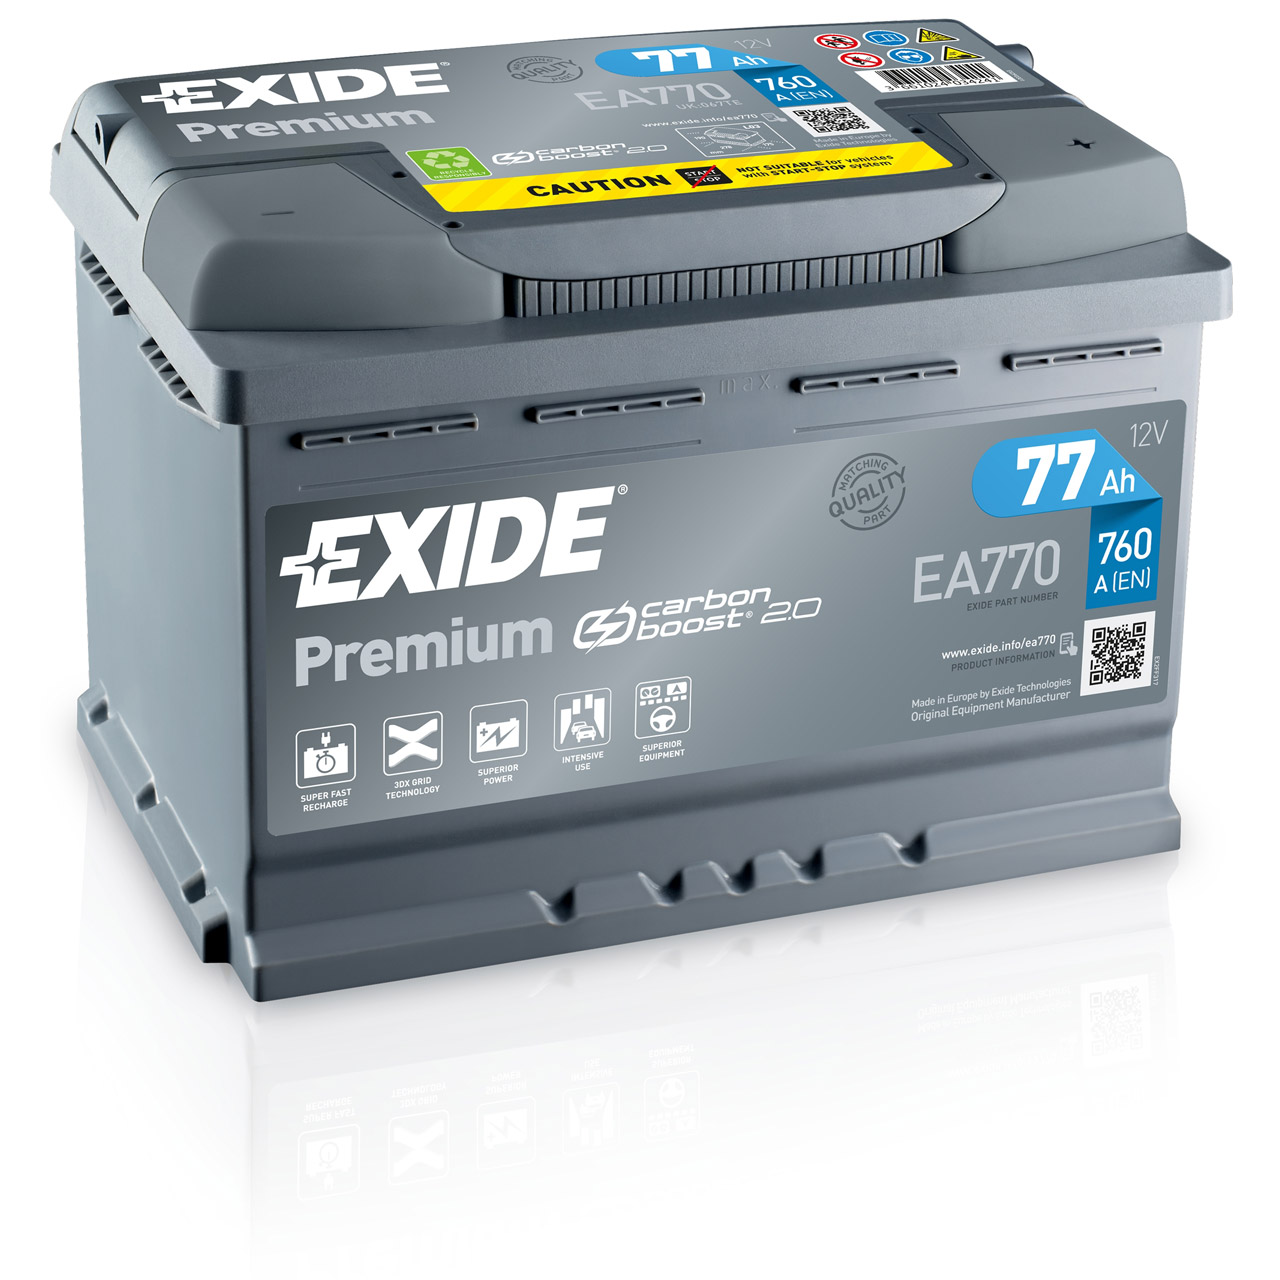 Starter Battery 7P0 915 105 EXIDE, VARTA, BOSCH in original quality